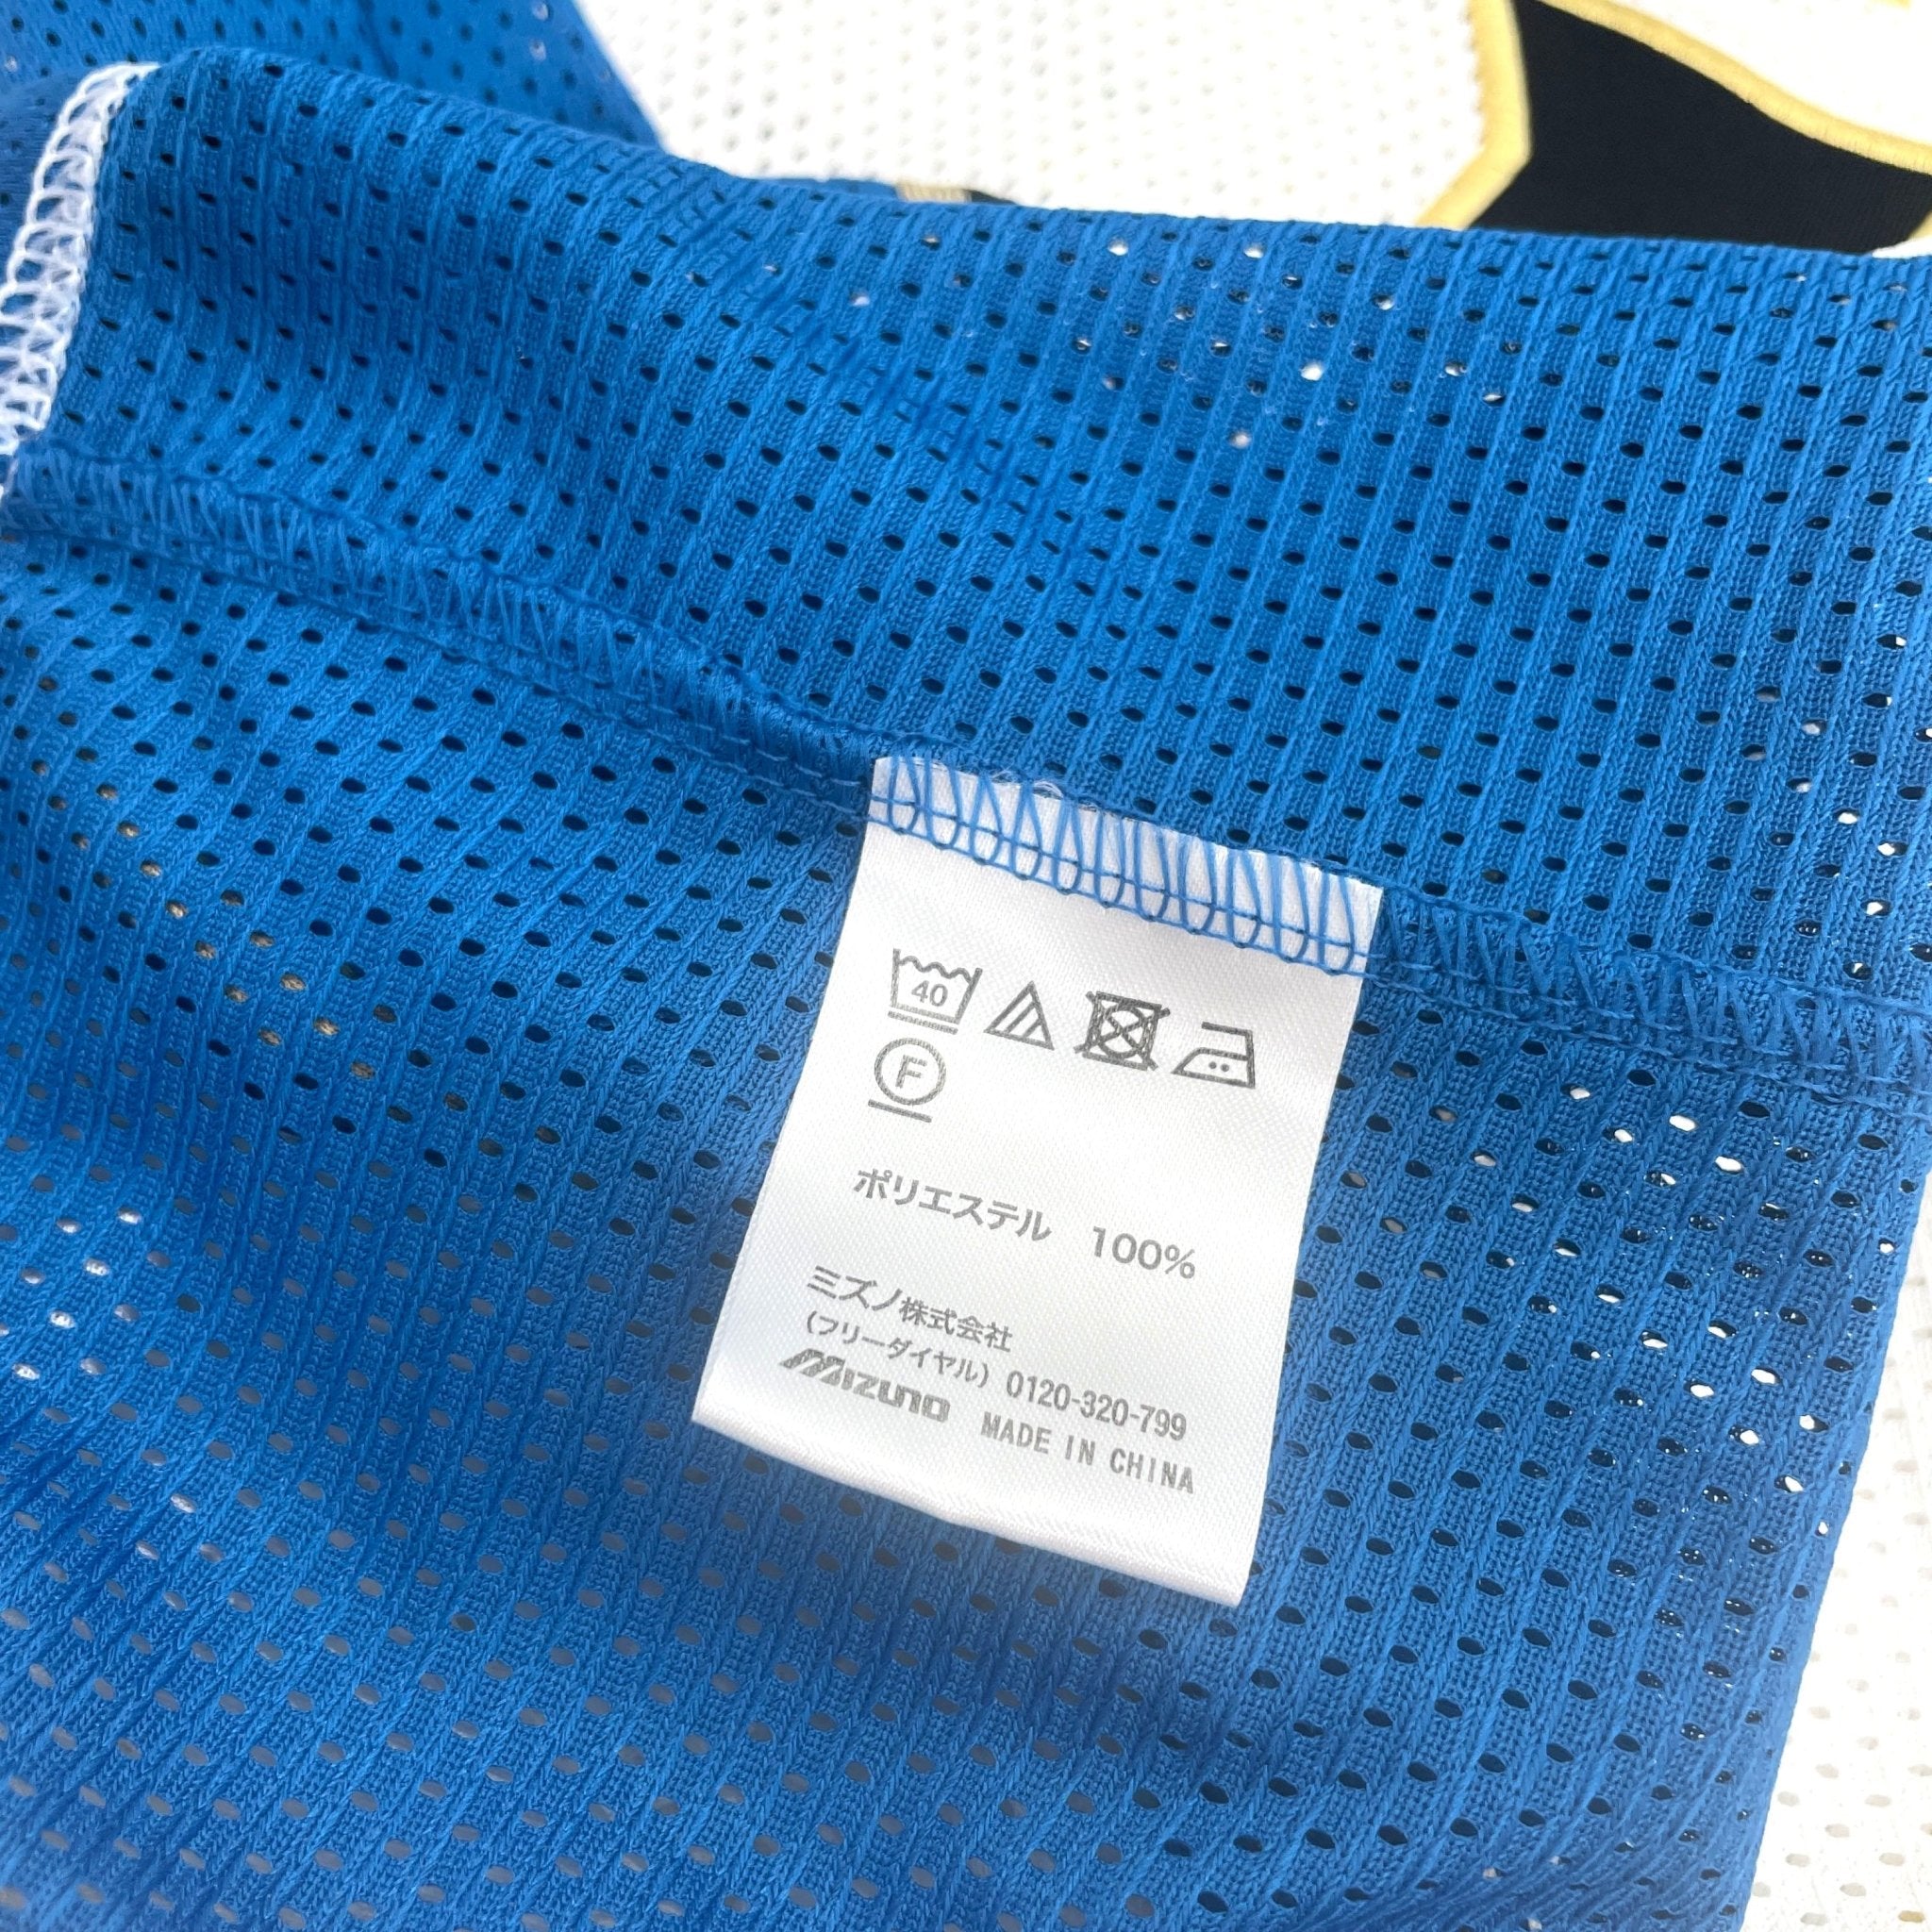  Men's Hokkaido Nippon-Ham #11 Ohtani Fighters Summer Baseball  Jersey Stitched Blue Size S : Clothing, Shoes & Jewelry